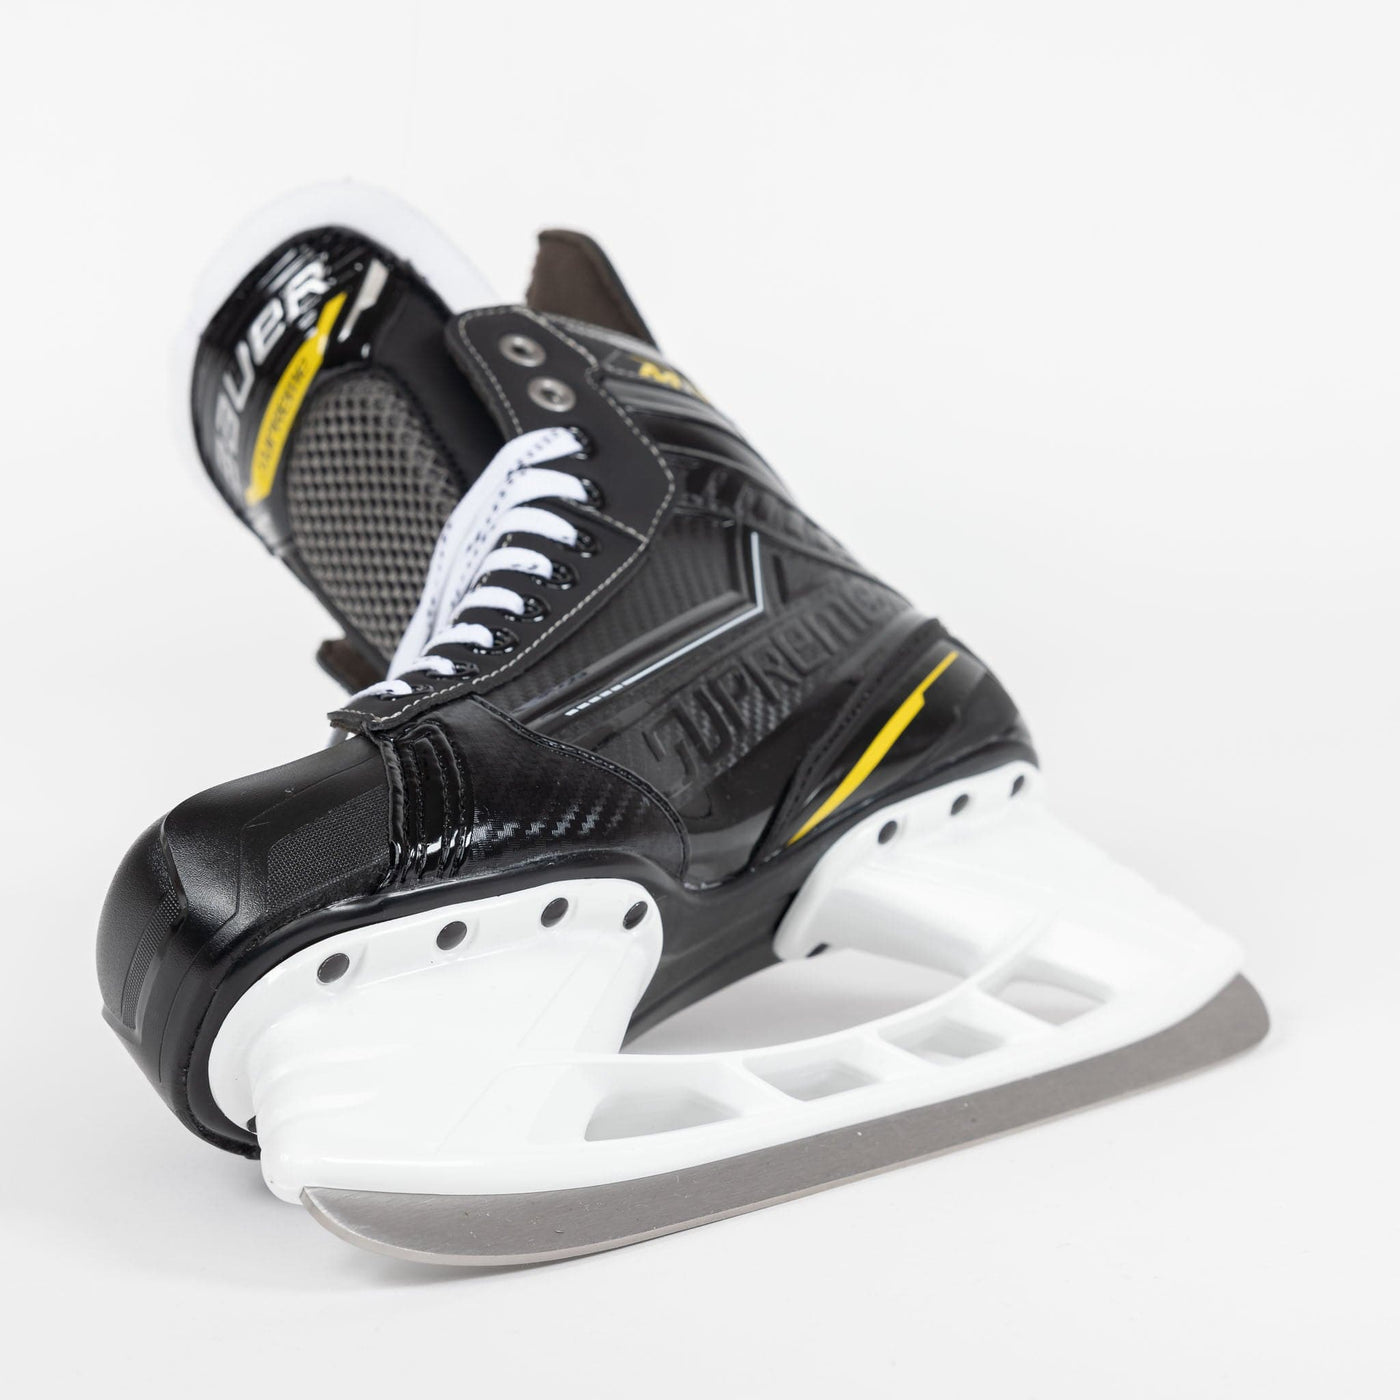 Bauer Supreme M1 Intermediate Hockey Skates - The Hockey Shop Source For Sports